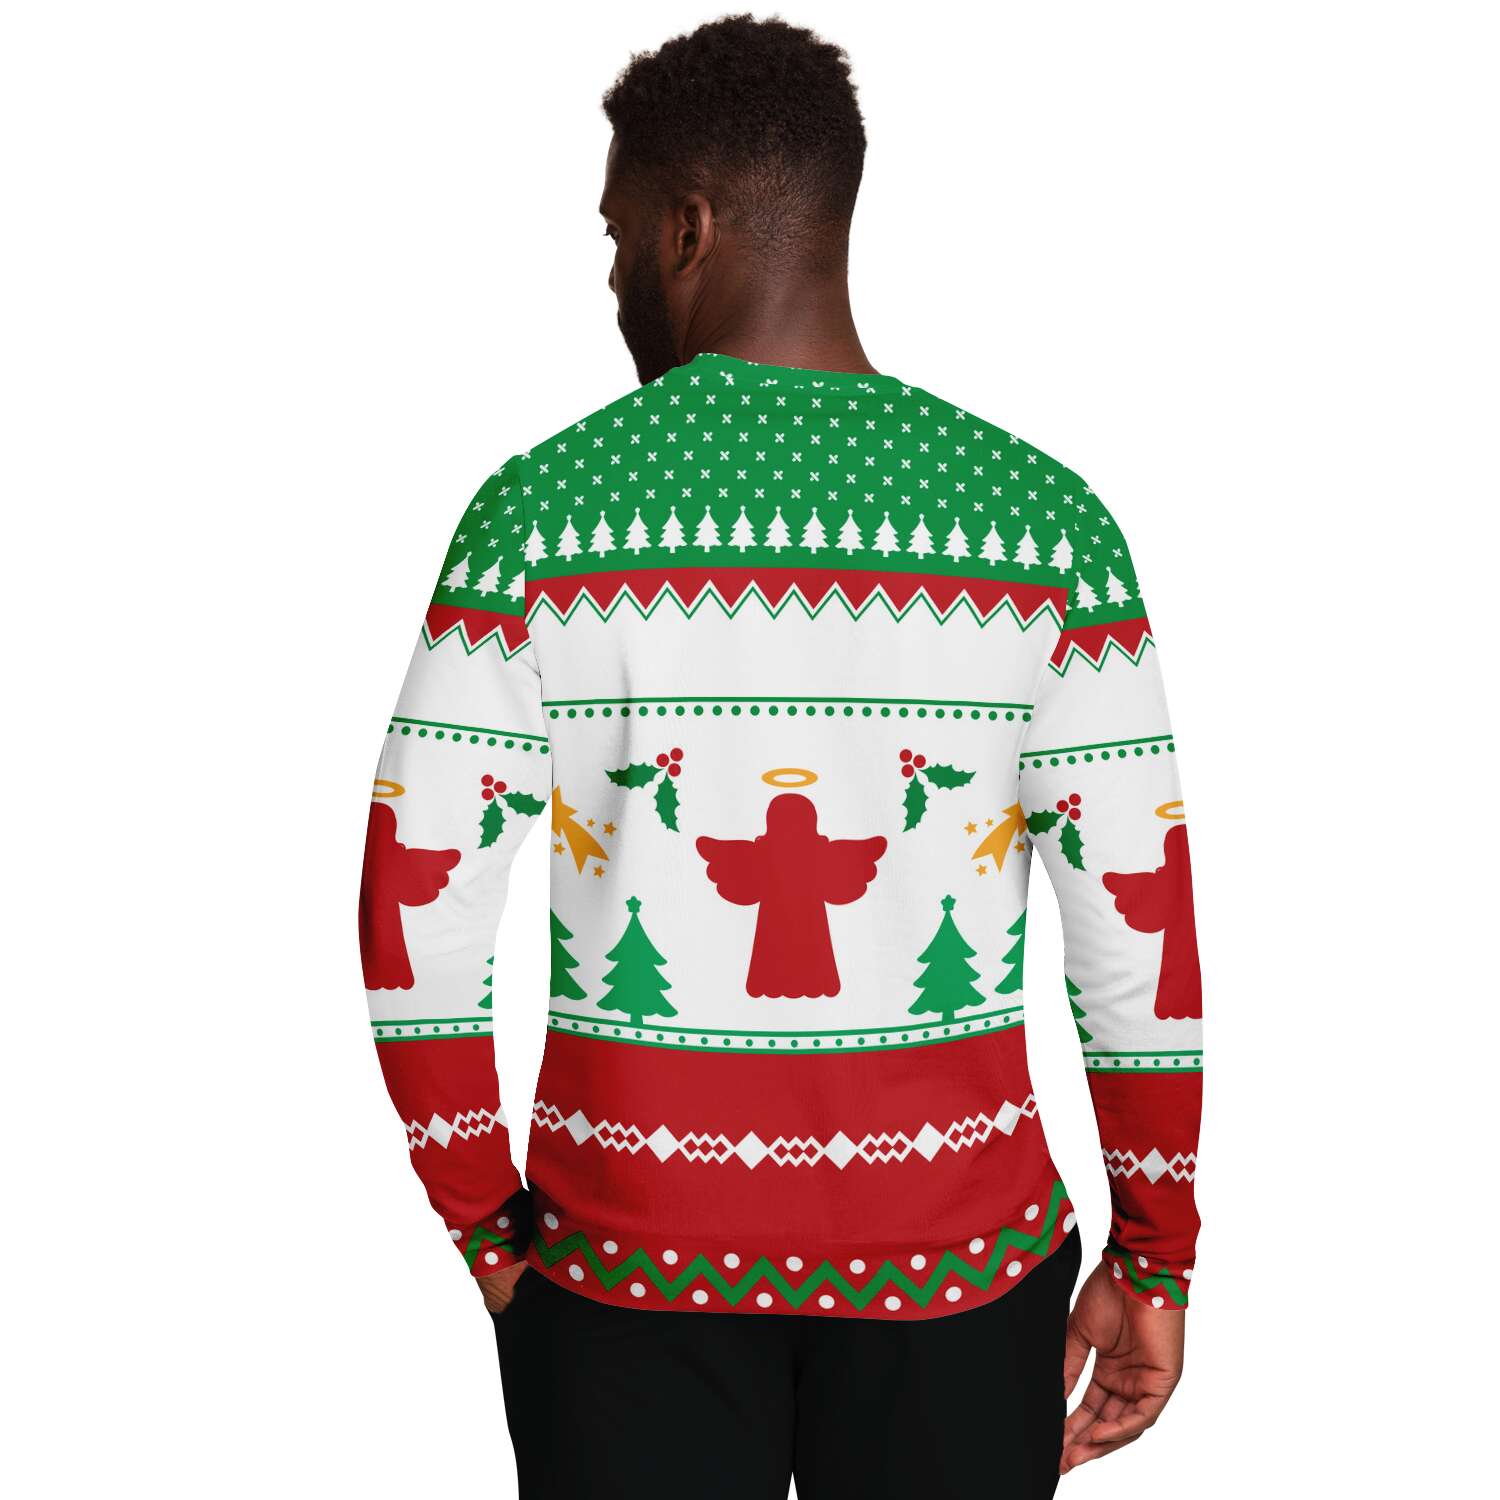 Fitness Sweatshirt | Unisex Ugly Christmas Sweater, Xmas Sweater, Holiday Sweater, Festive Sweater, Funny Sweater, Funny Party Shirt